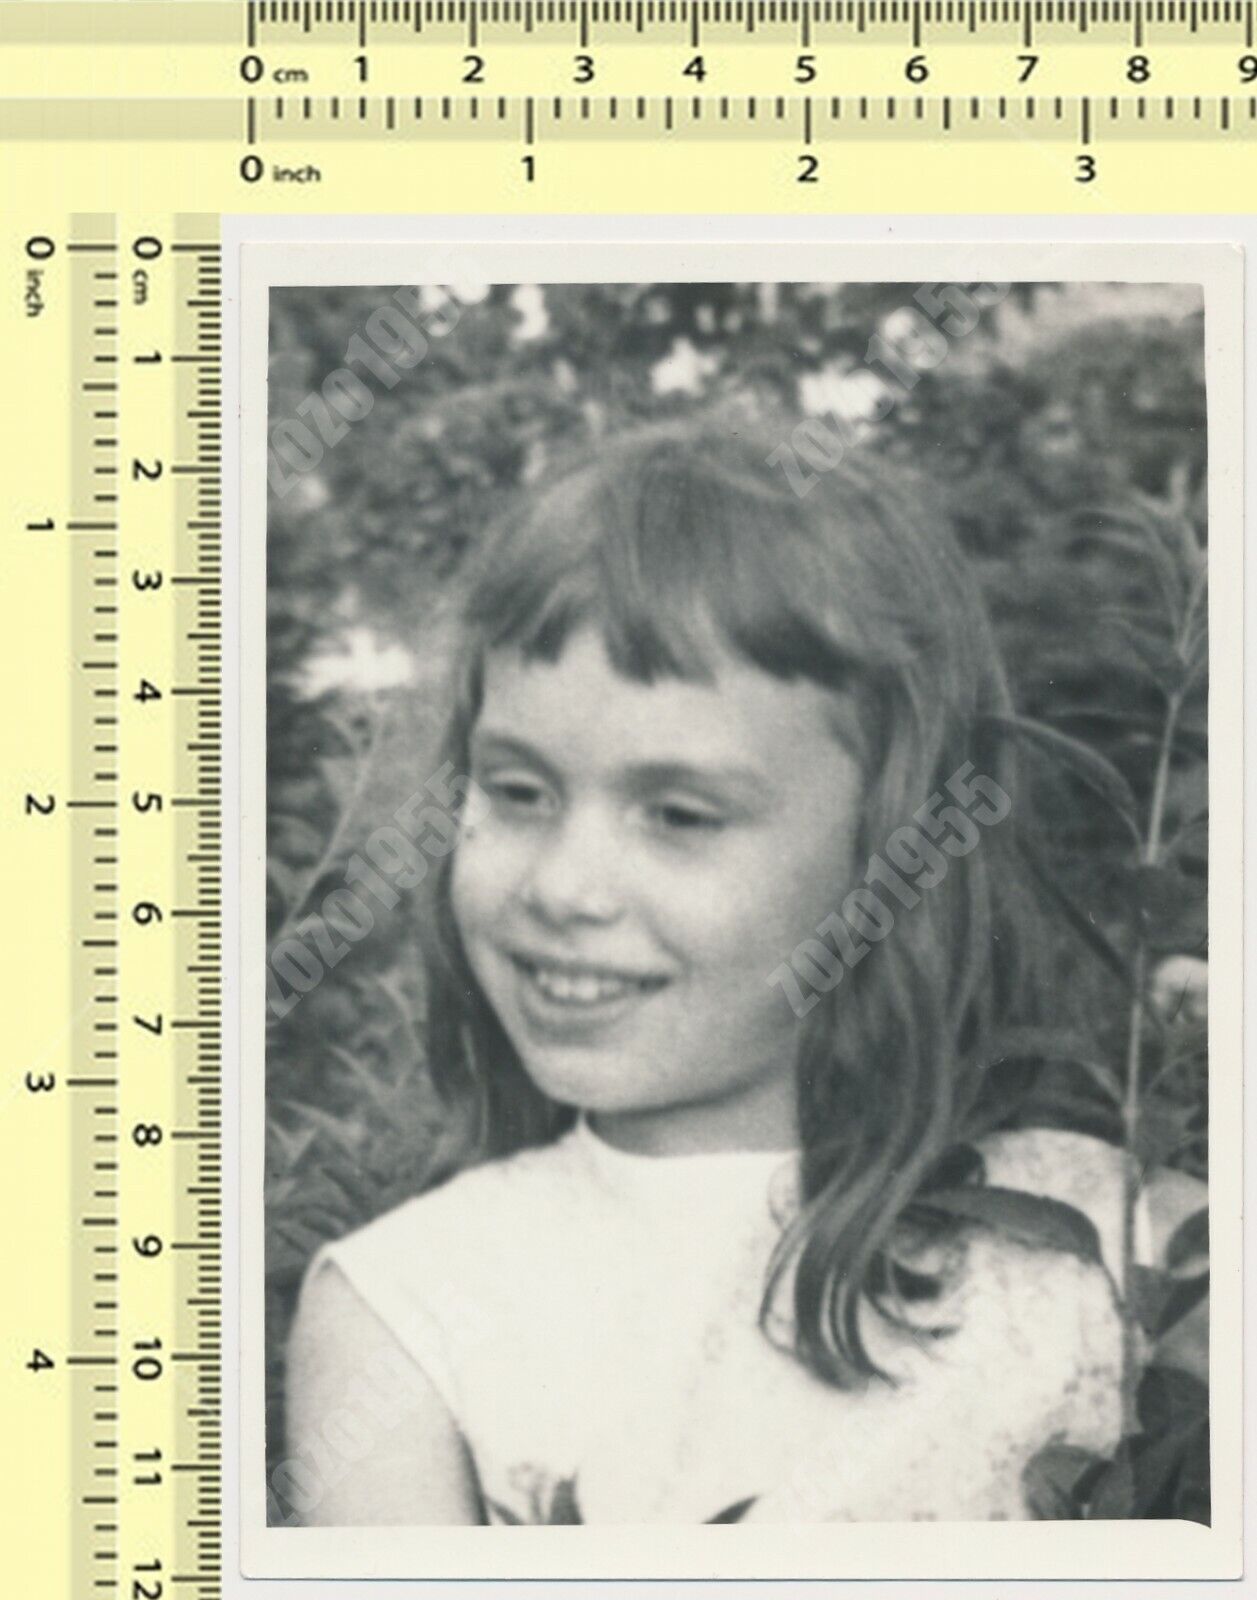 1970's Girl Smile Kid Child Smiling Portrait vintage original old photo snapshot